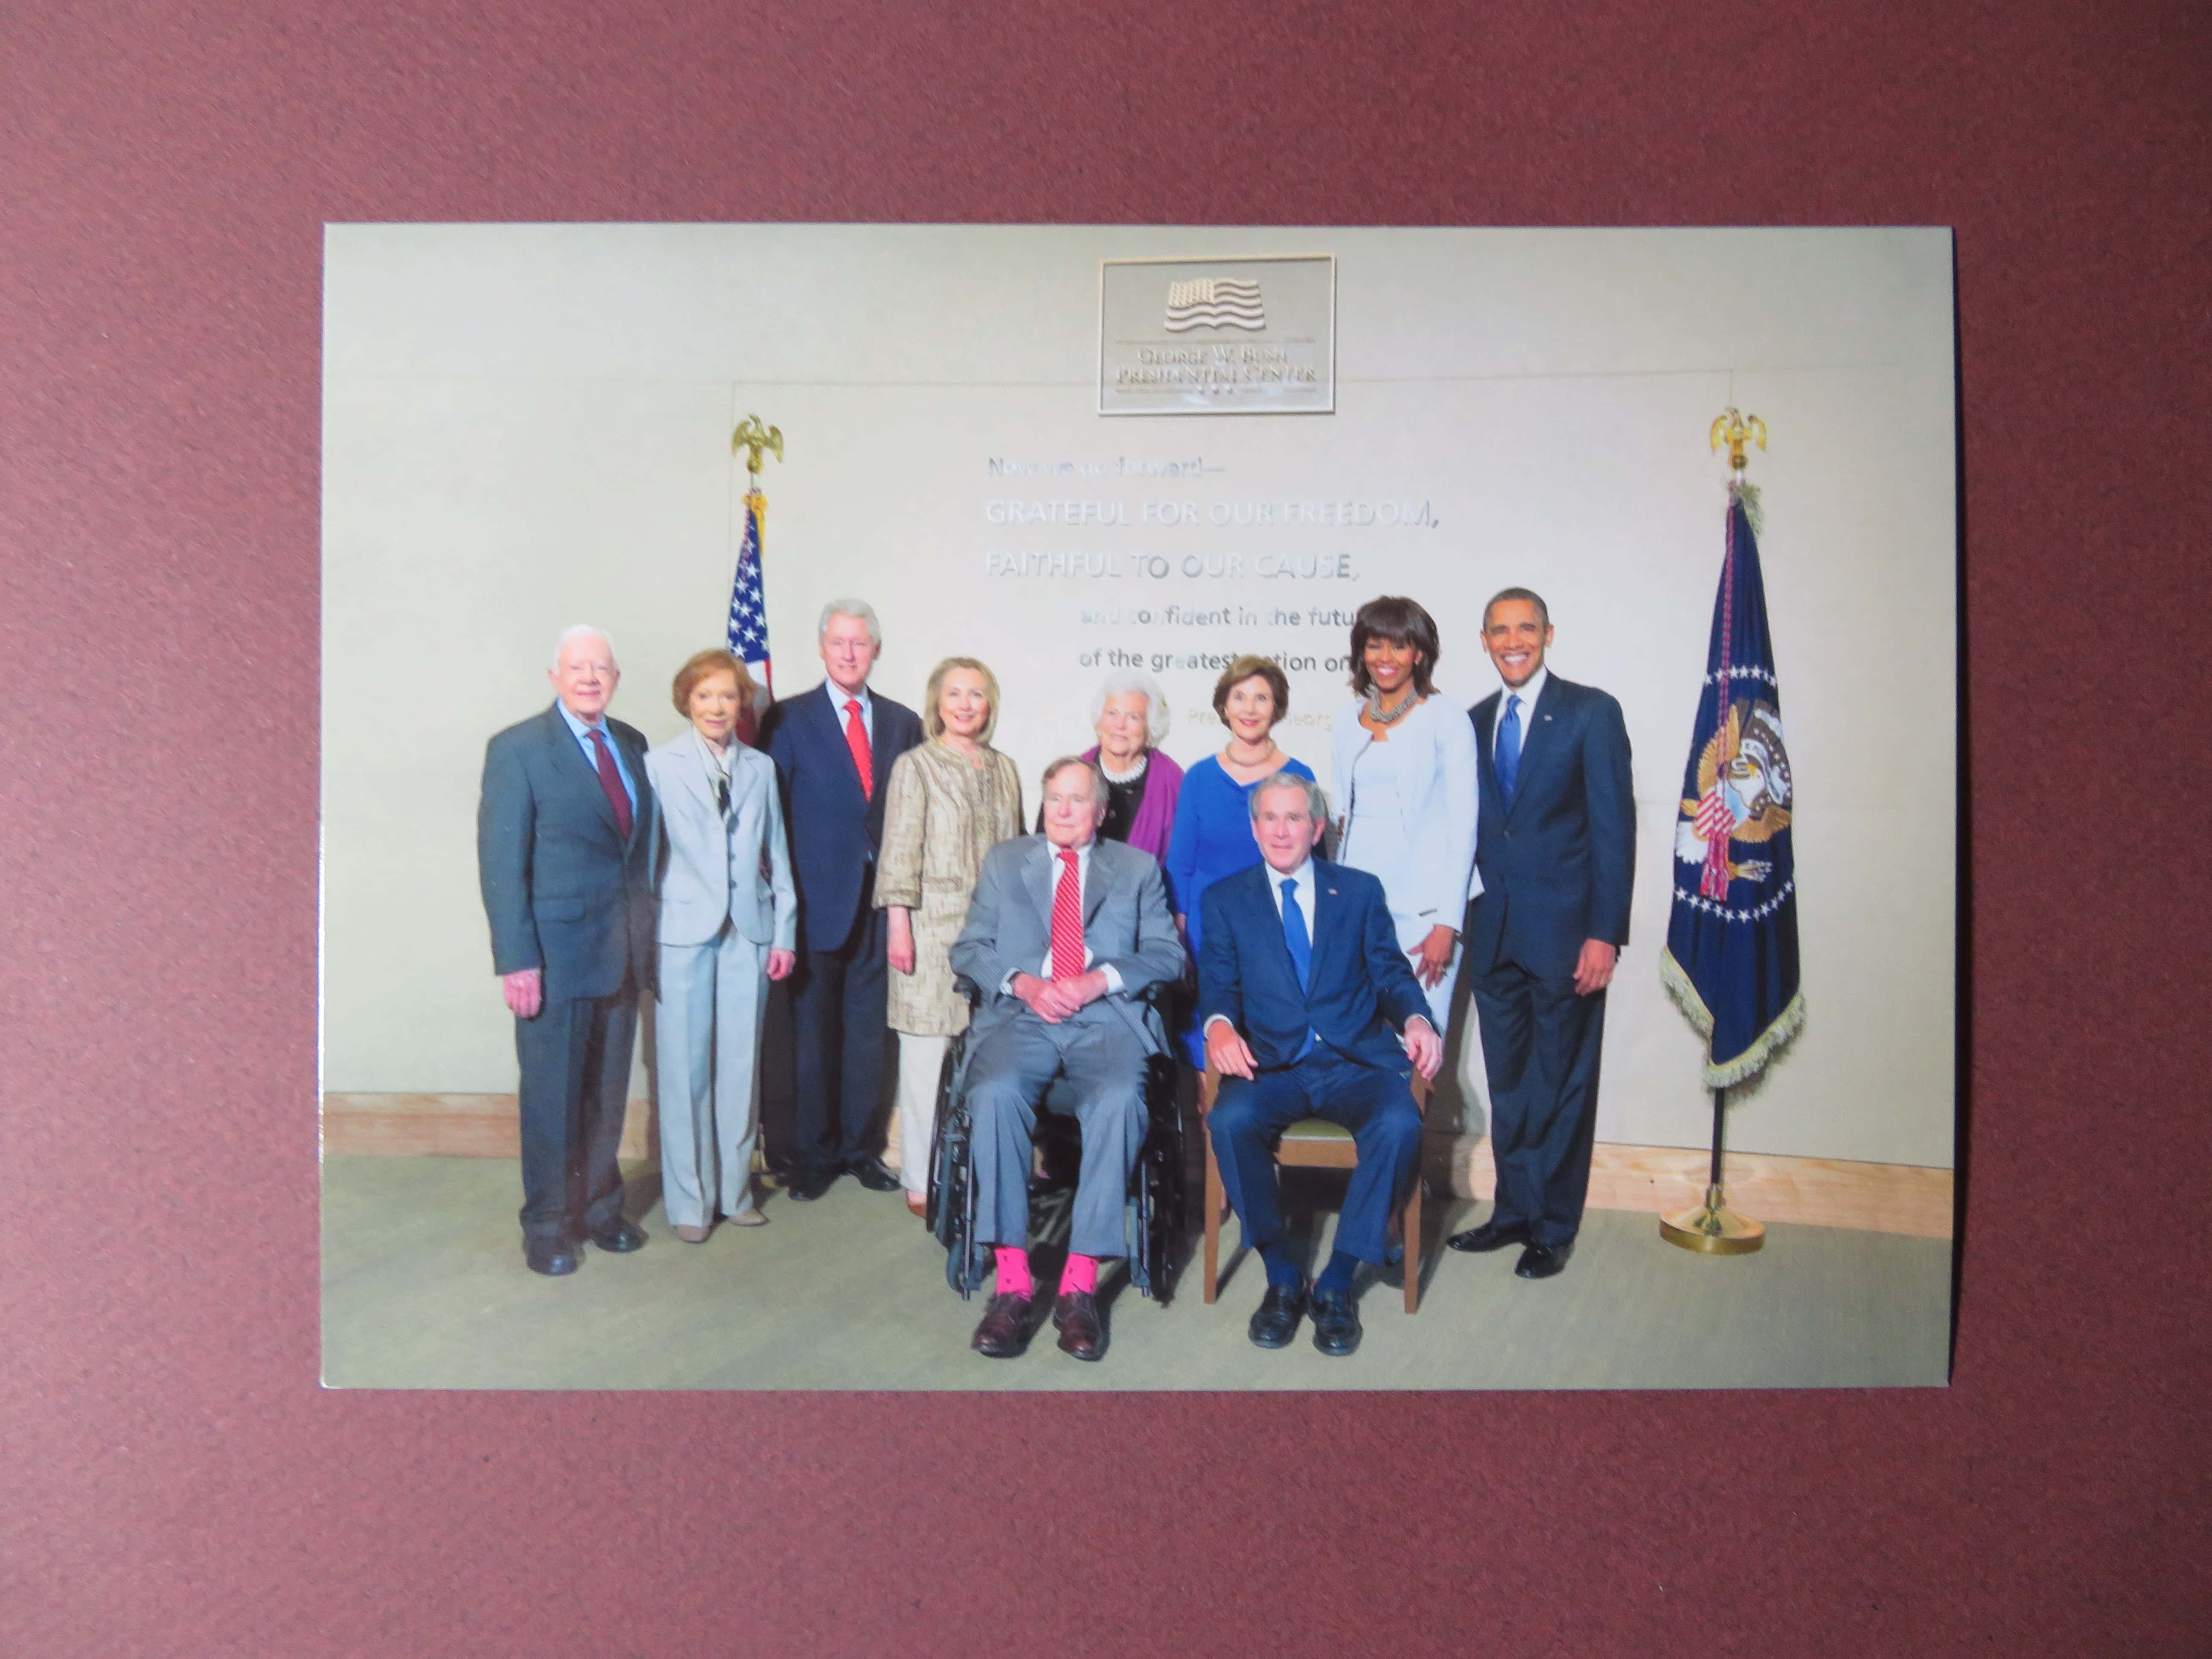 Carter, Clinton, GHW Bush, GW Bush, Obama and their wives